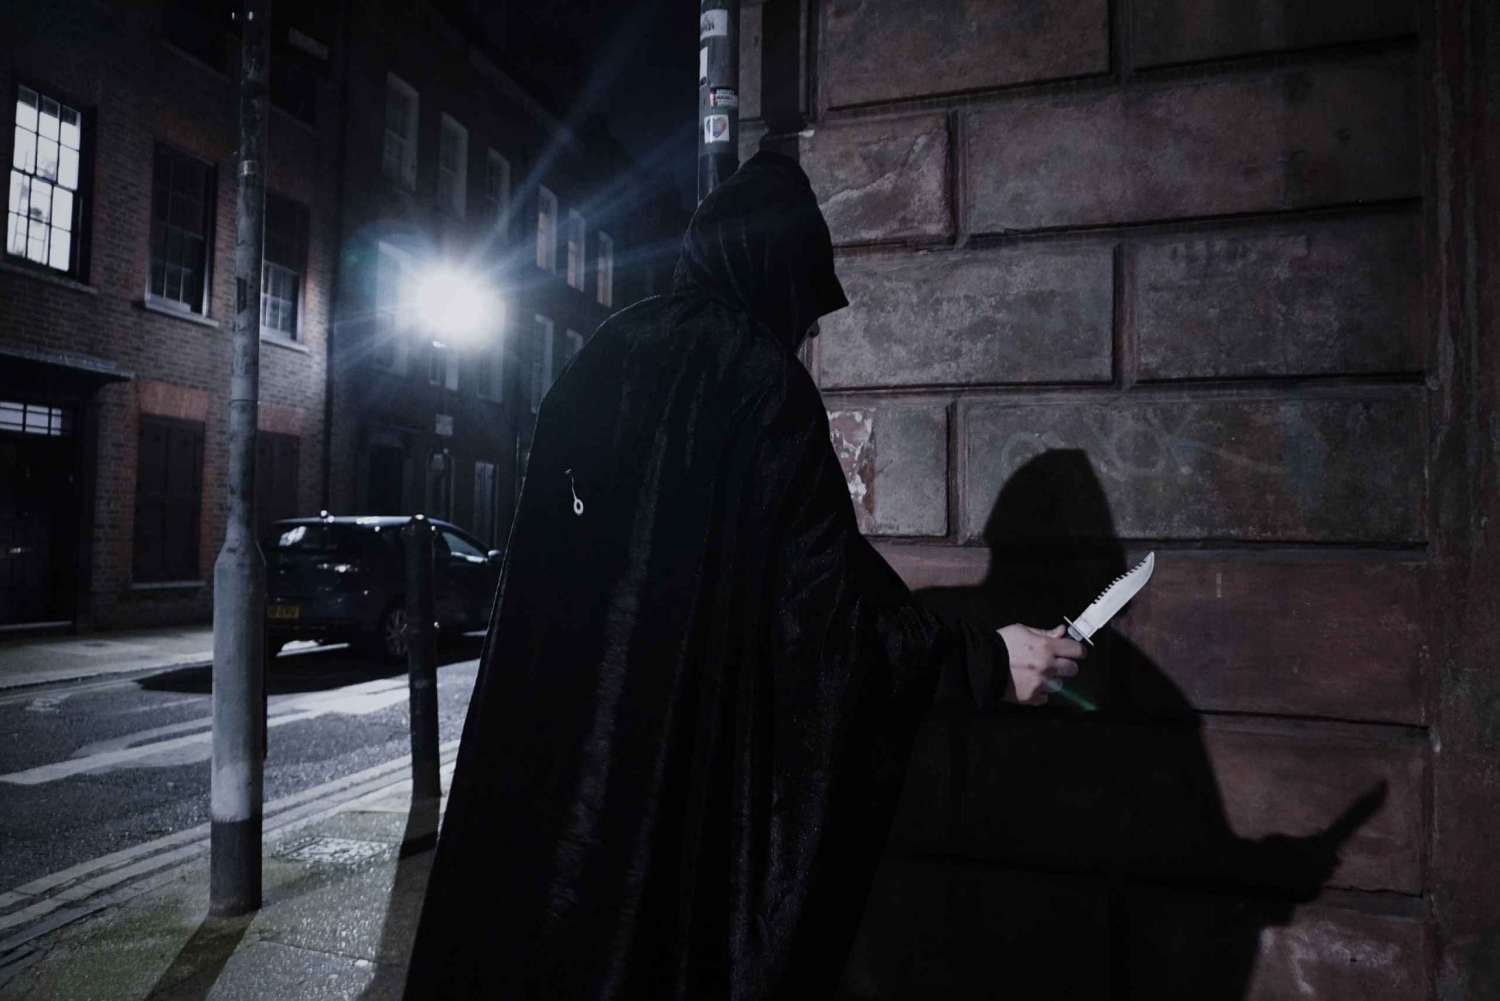 London: Interaktive Murder Mystery Jack The Ripper Tour